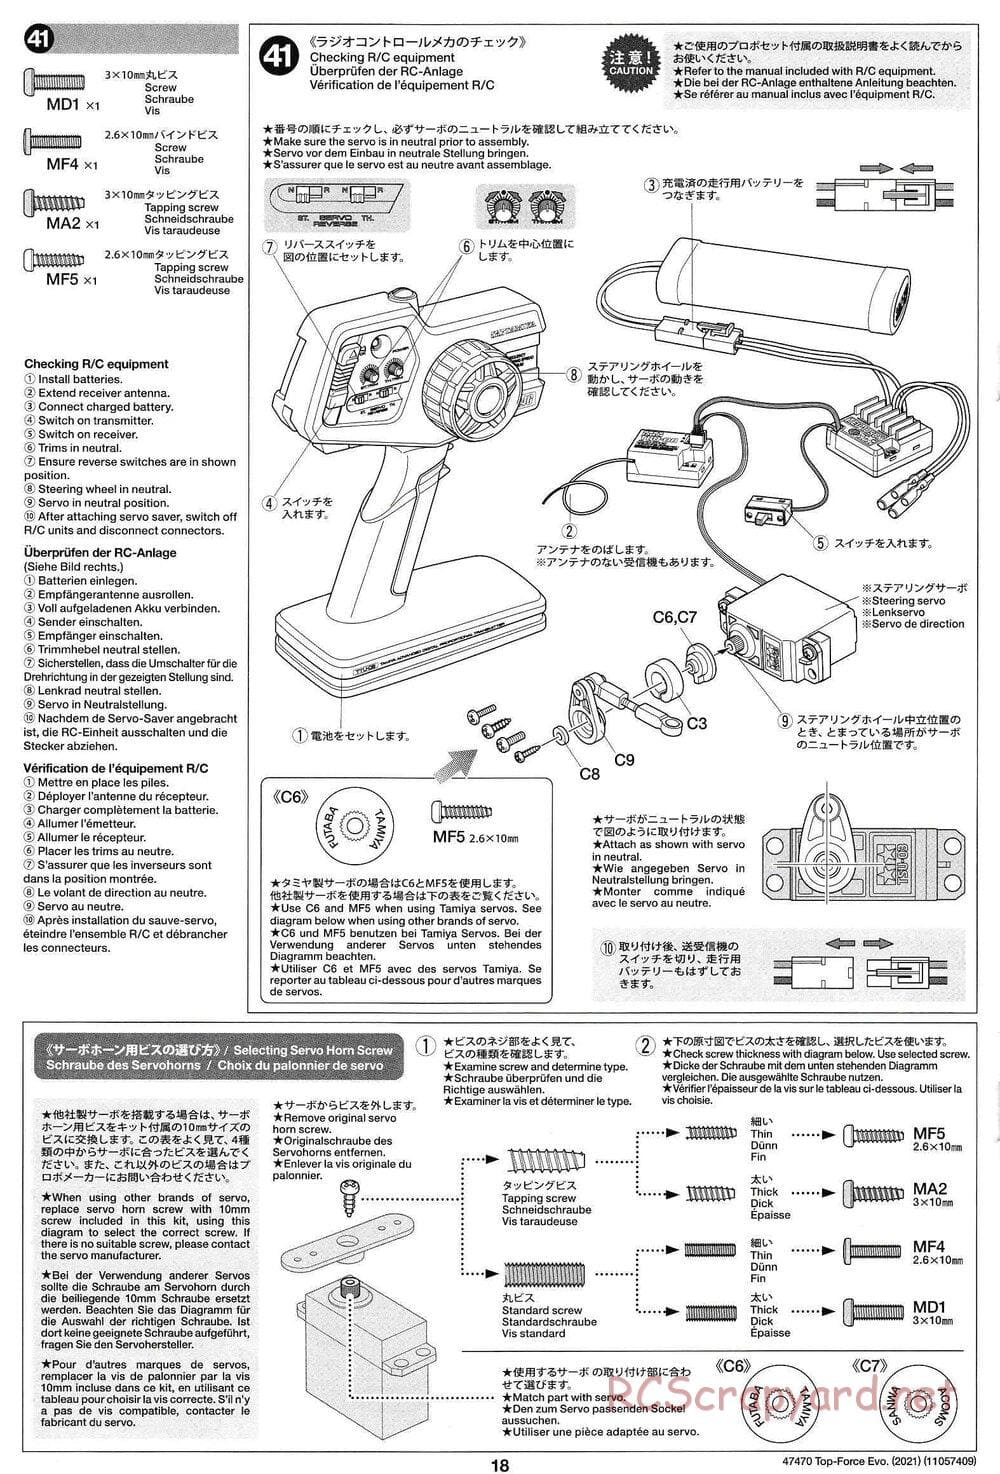 Tamiya - Top Force Evo 2021 - DF-01 Chassis - Manual - Page 18